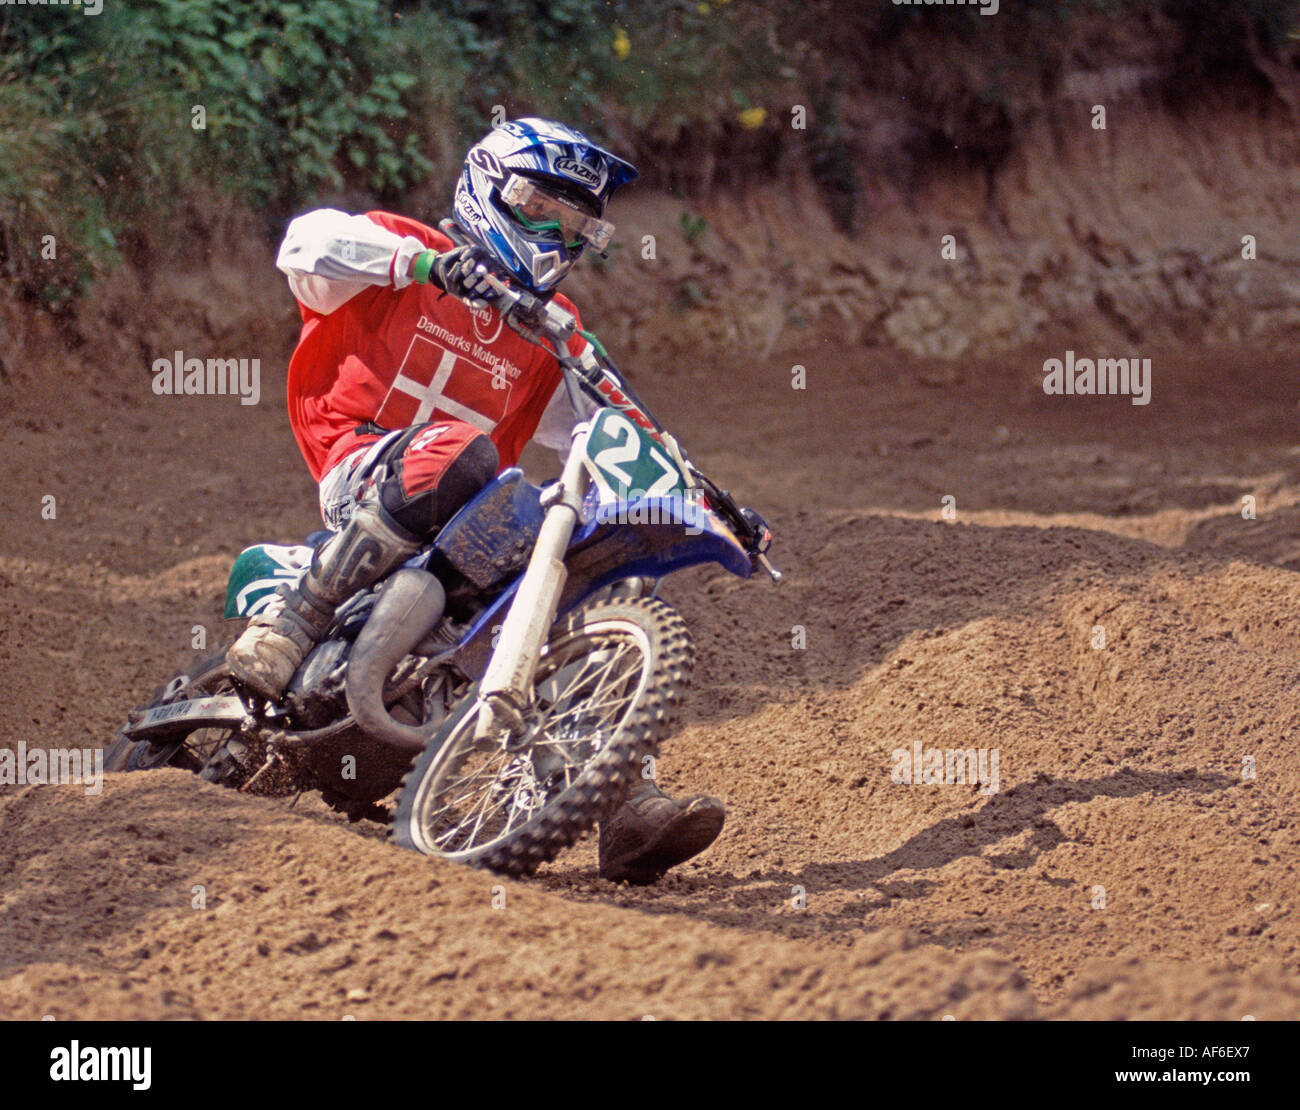 Motocross sonderskov denmark Stock Photo